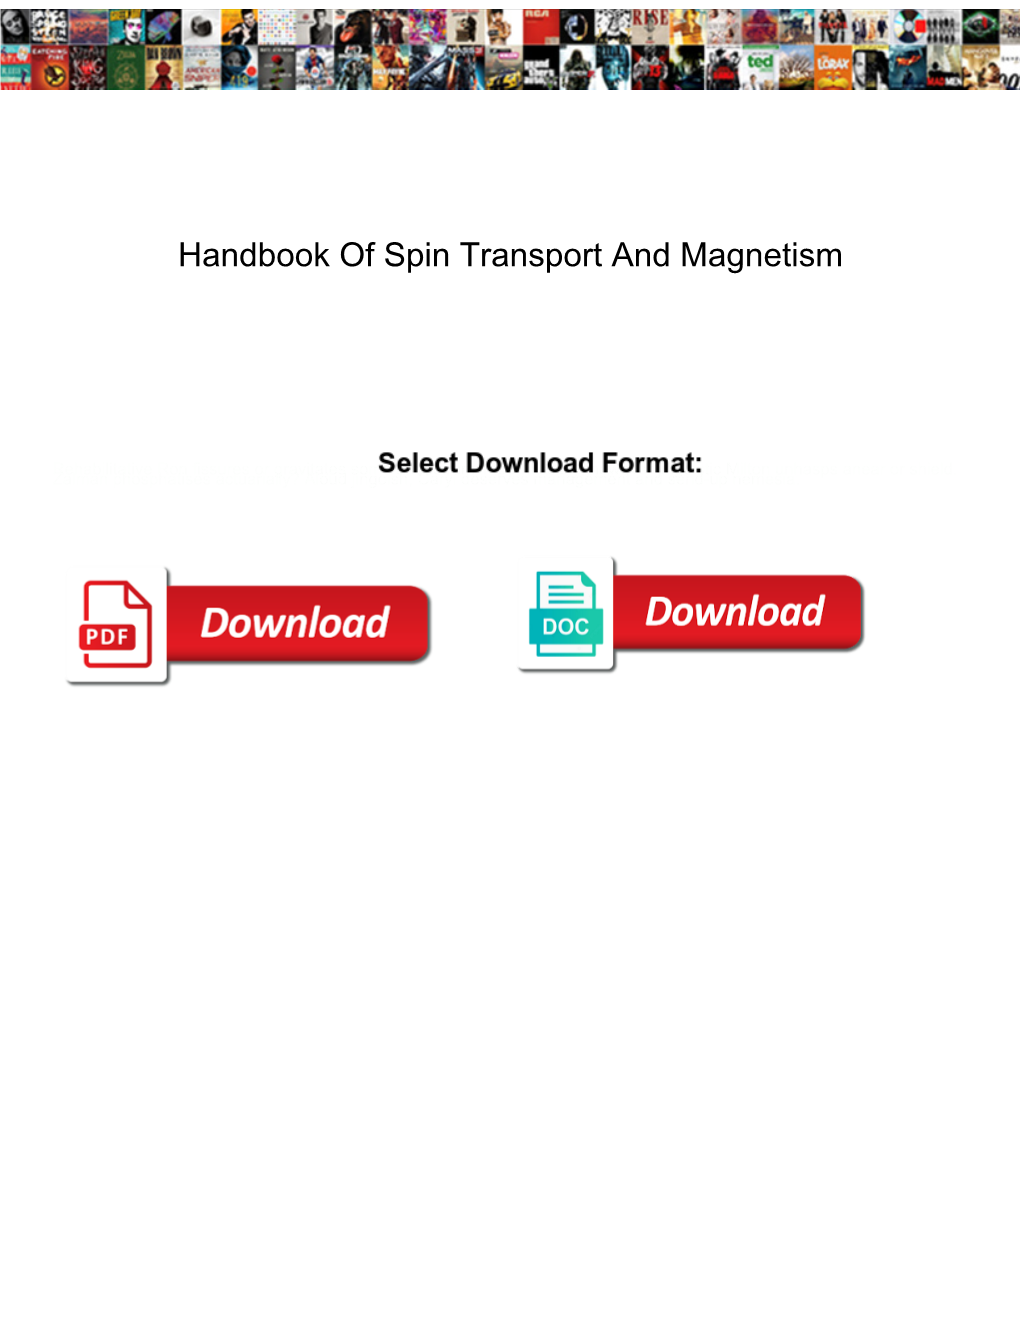 Handbook of Spin Transport and Magnetism